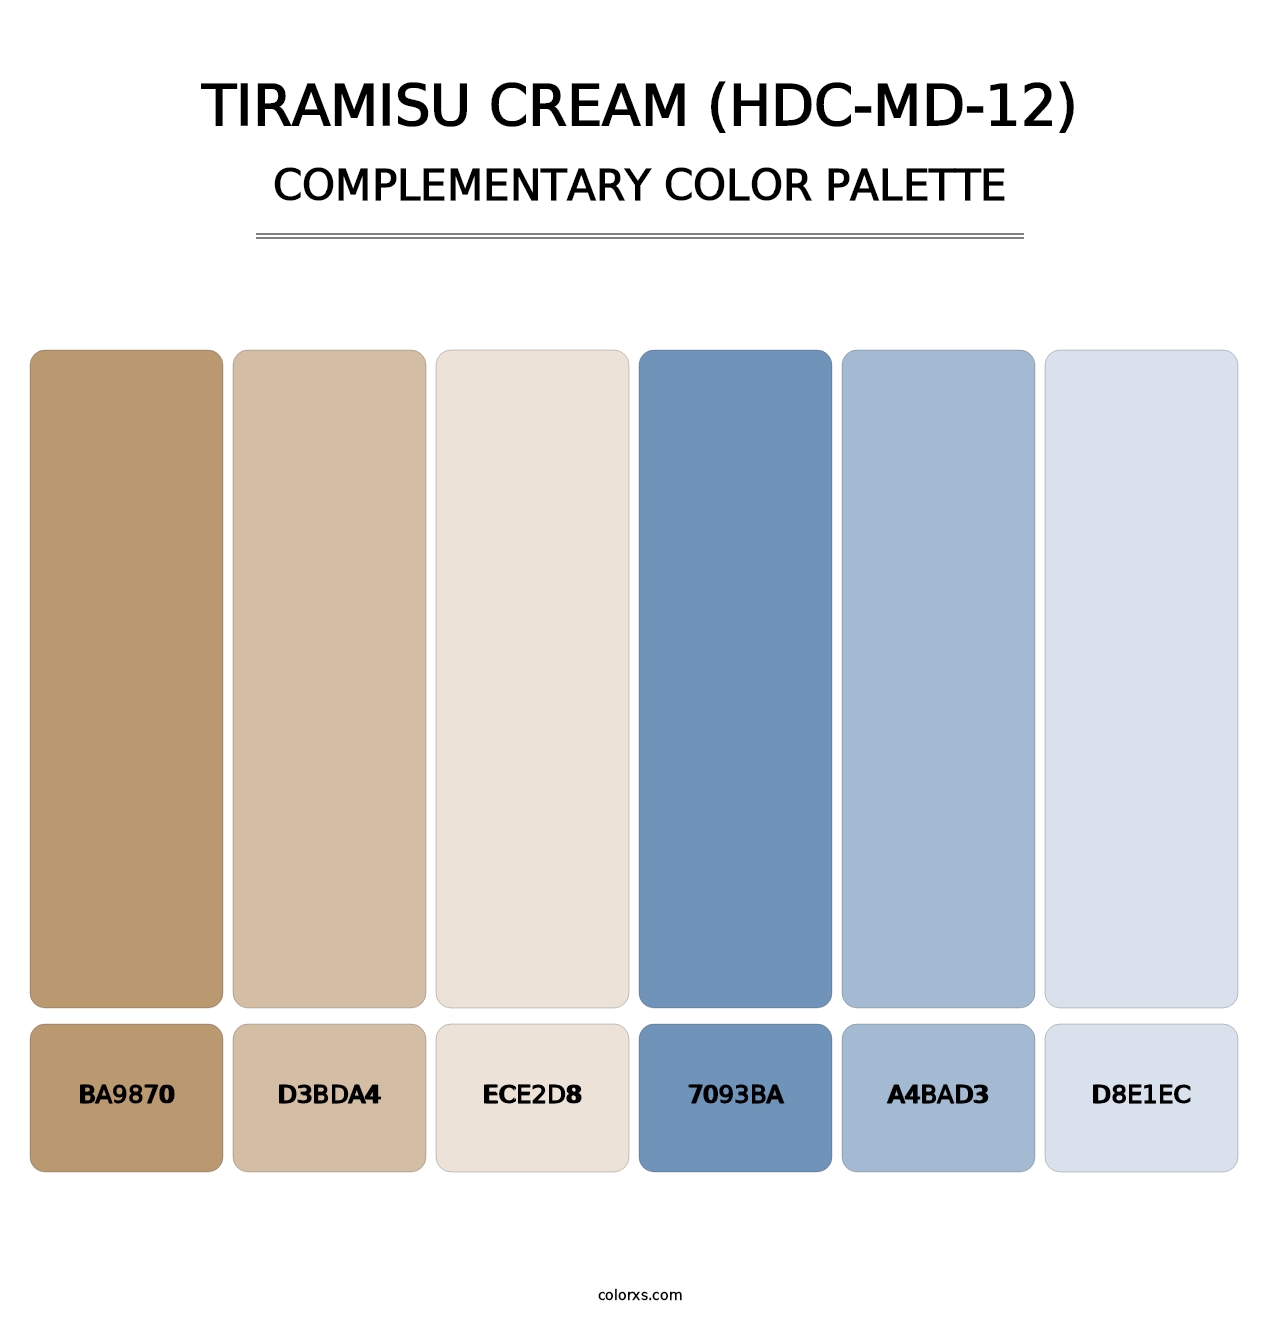 Tiramisu Cream (HDC-MD-12) - Complementary Color Palette